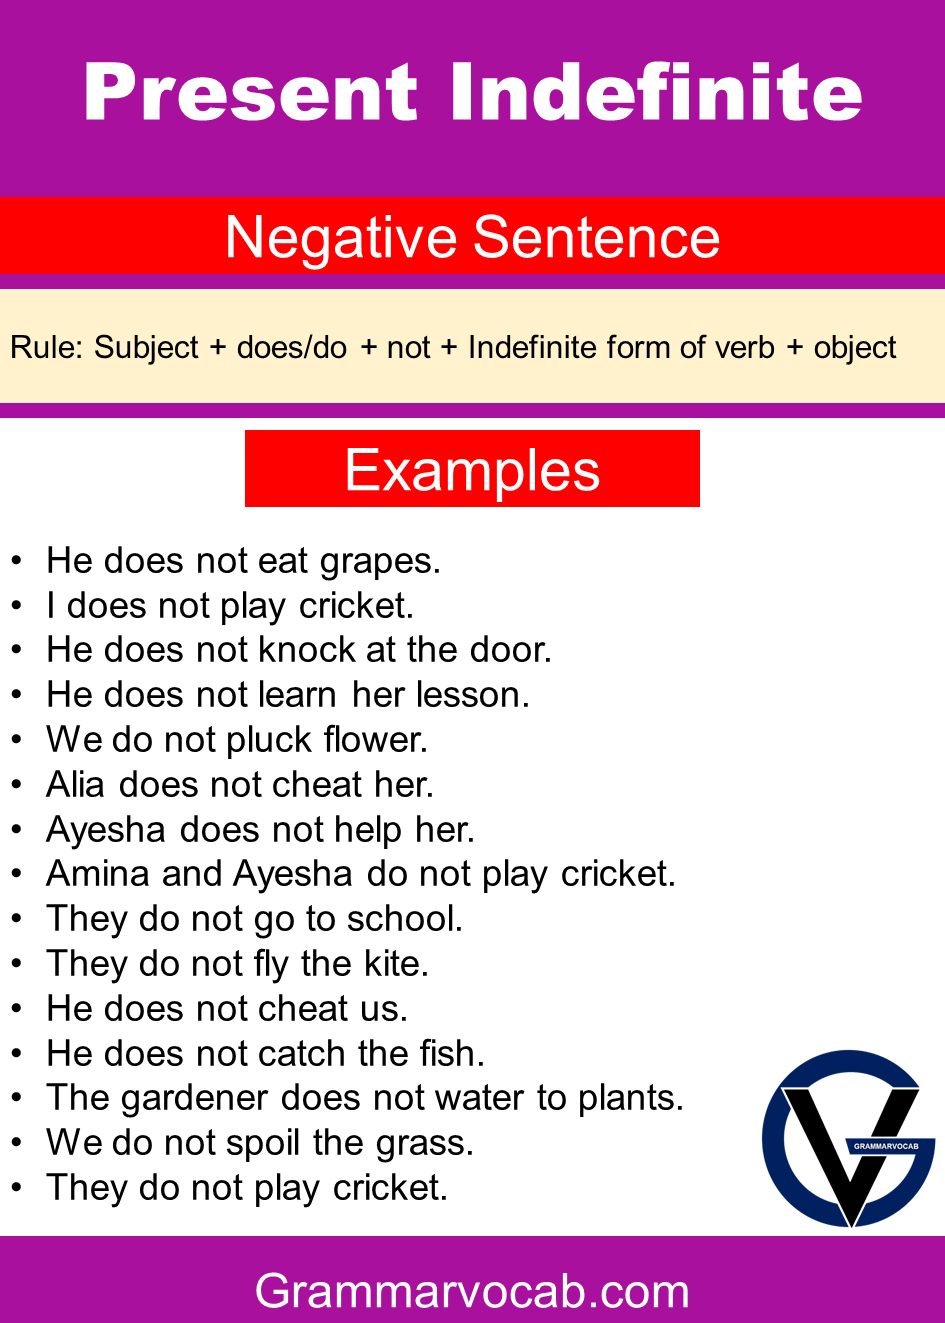 Present Indefinite Negative Tense Sentences